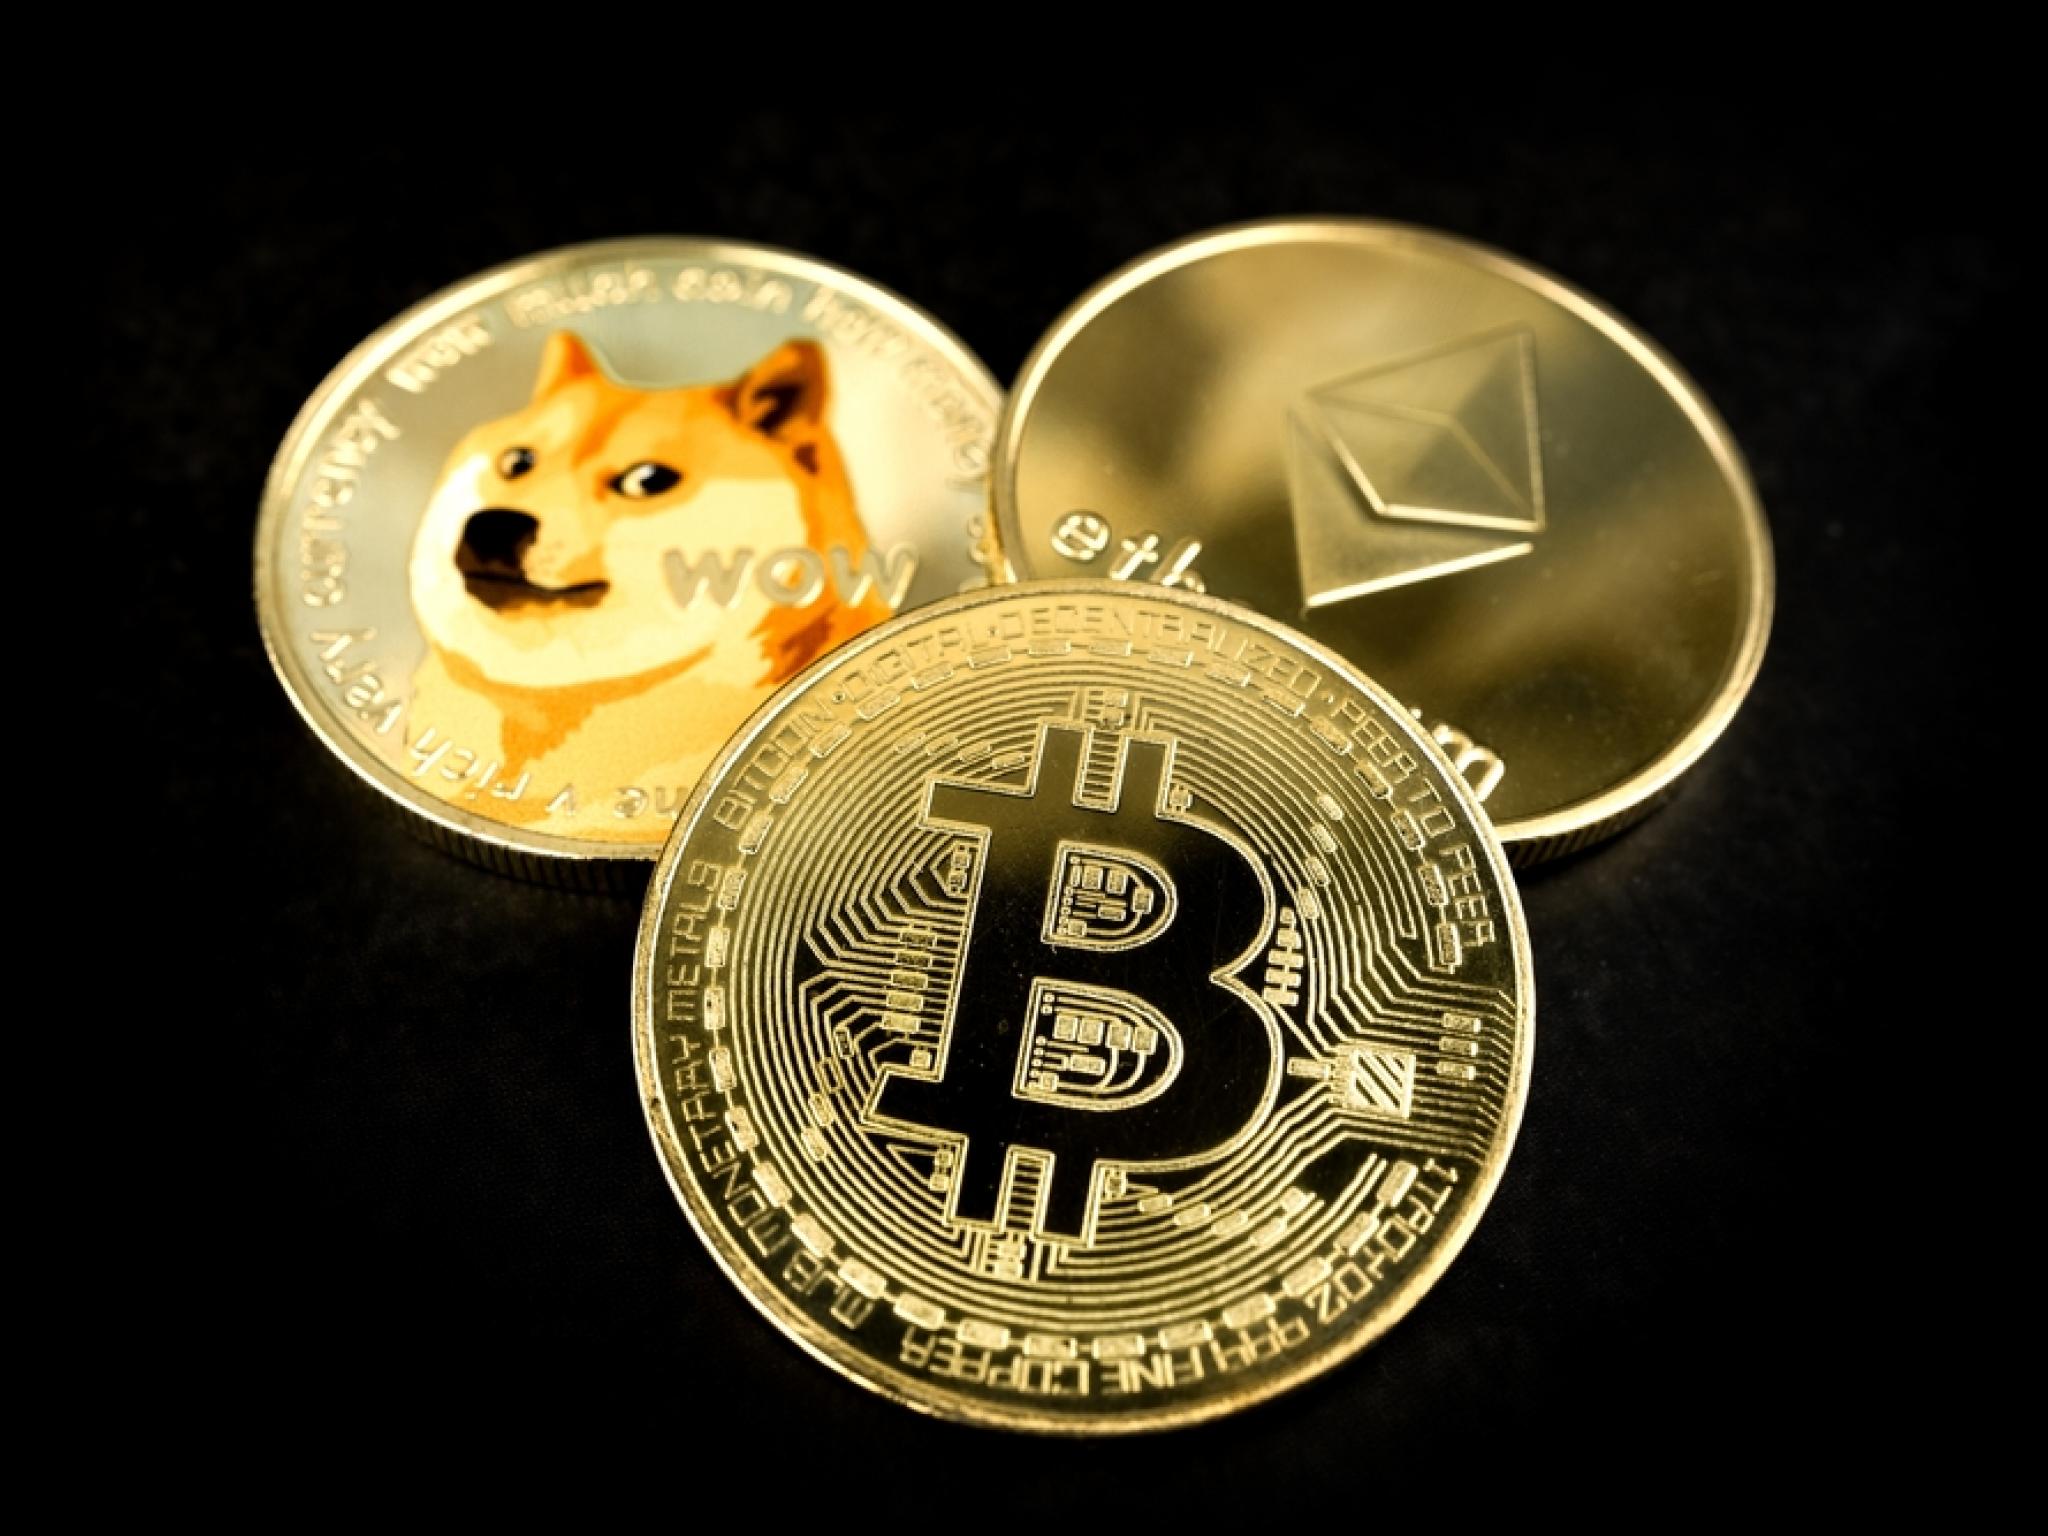  bitcoin-ethereum-dogecoin-on-a-knifes-edge-as-etf-decision-looms-weak-weak-weak-market-says-trader 